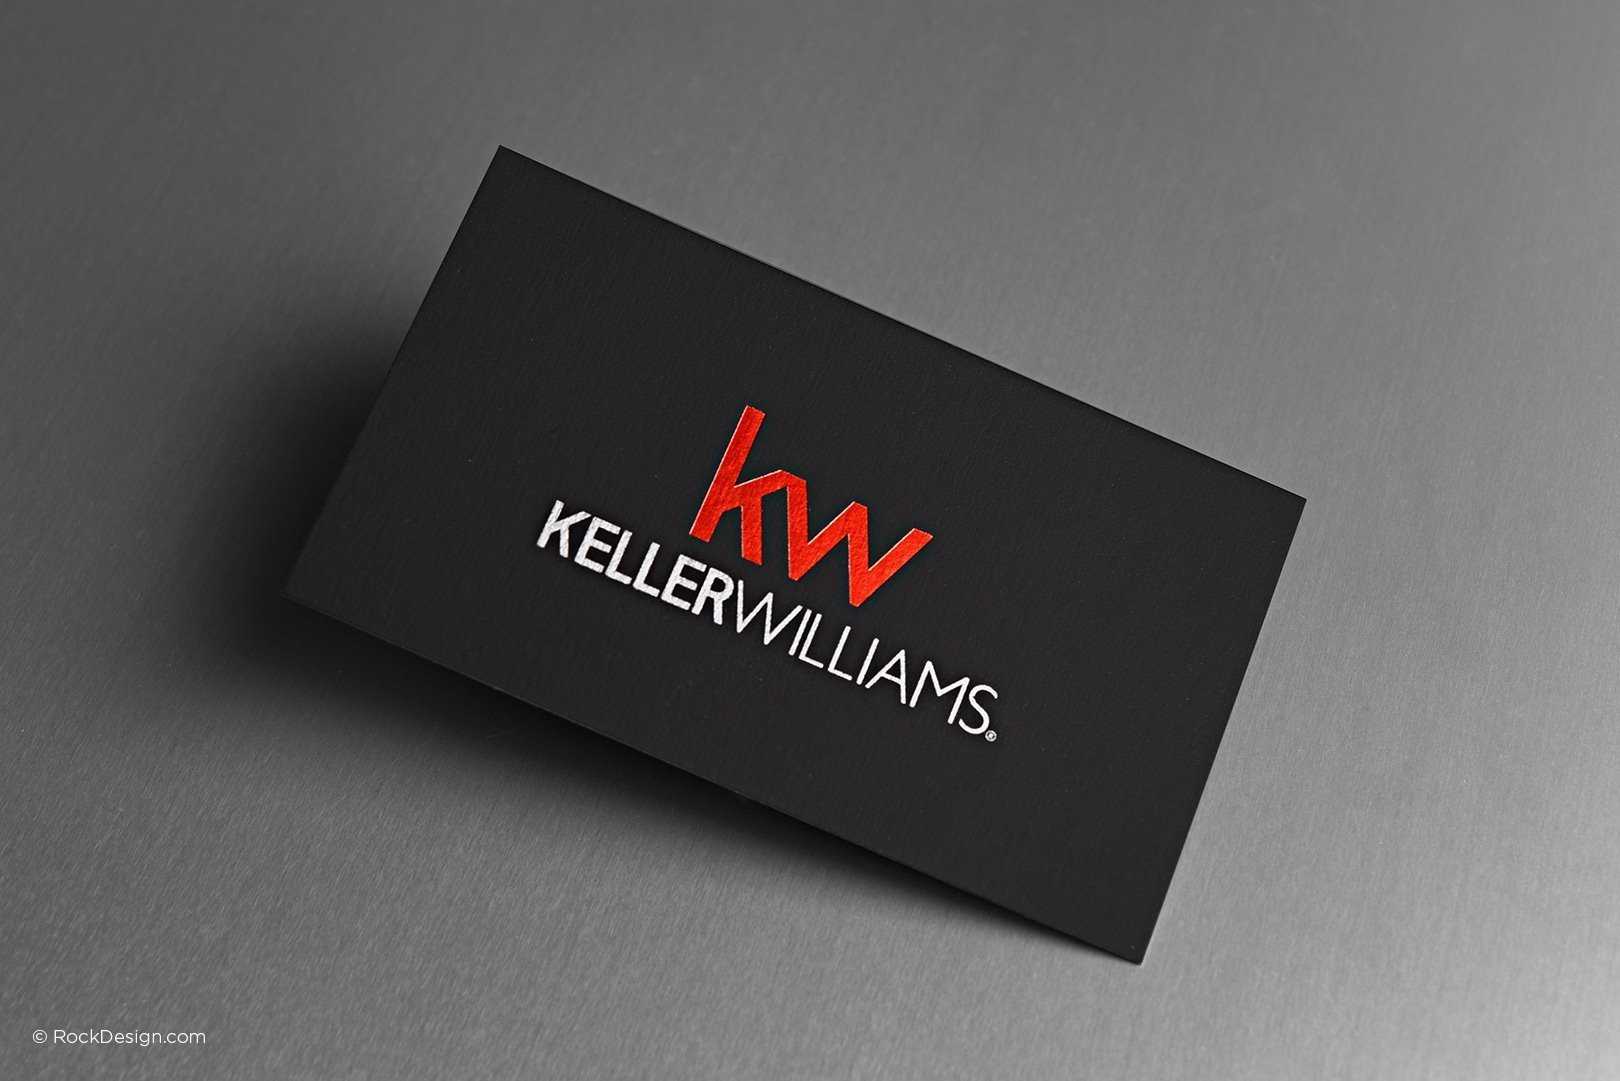 Free Keller Williams Business Card Template With Print With Keller Williams Business Card Templates